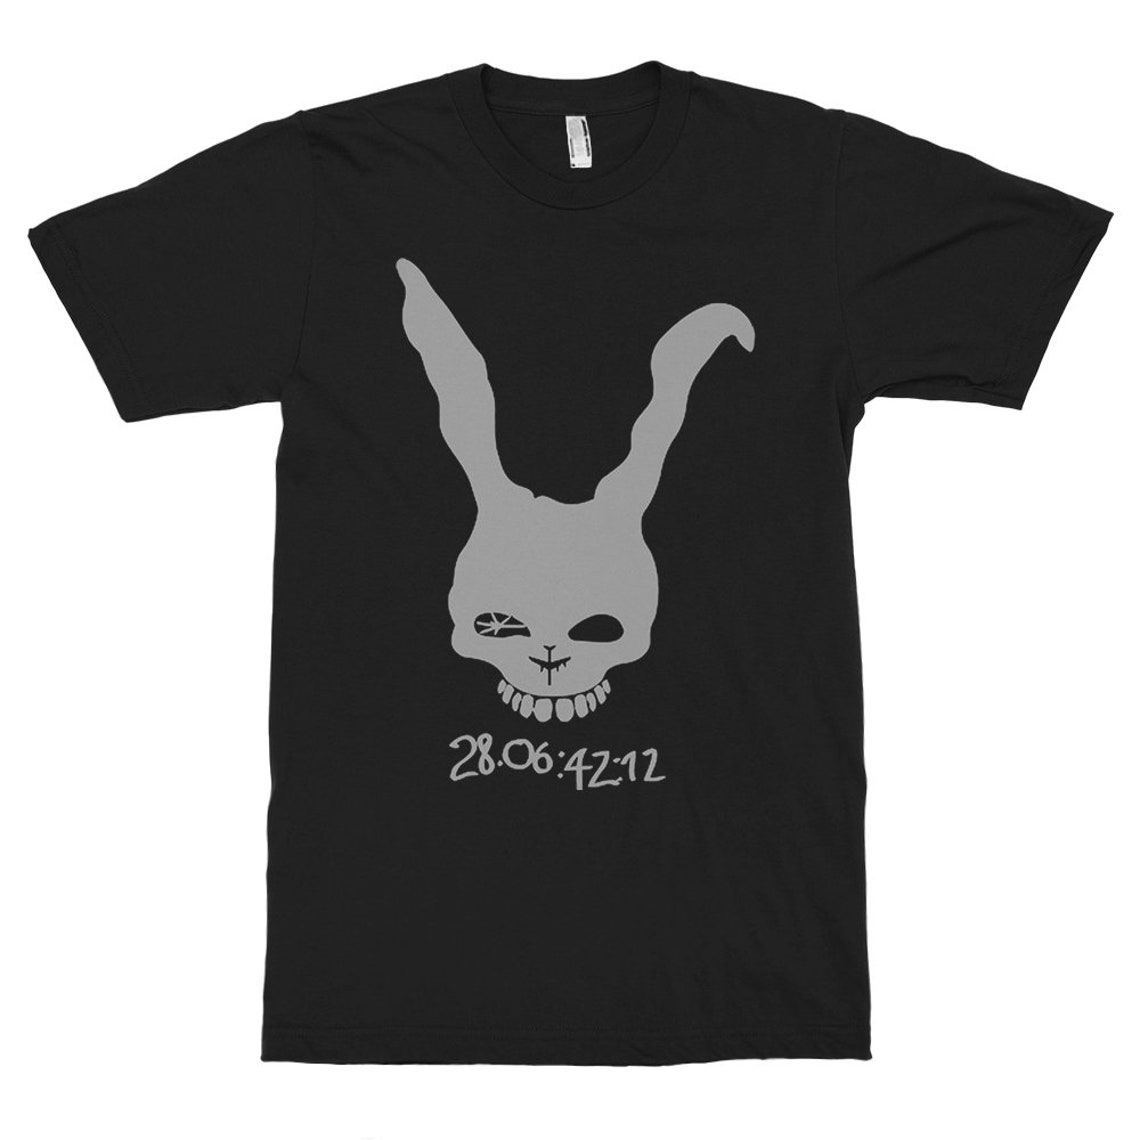 Donnie Darko Black T-Shirt High Quality Cotton Tee | Etsy